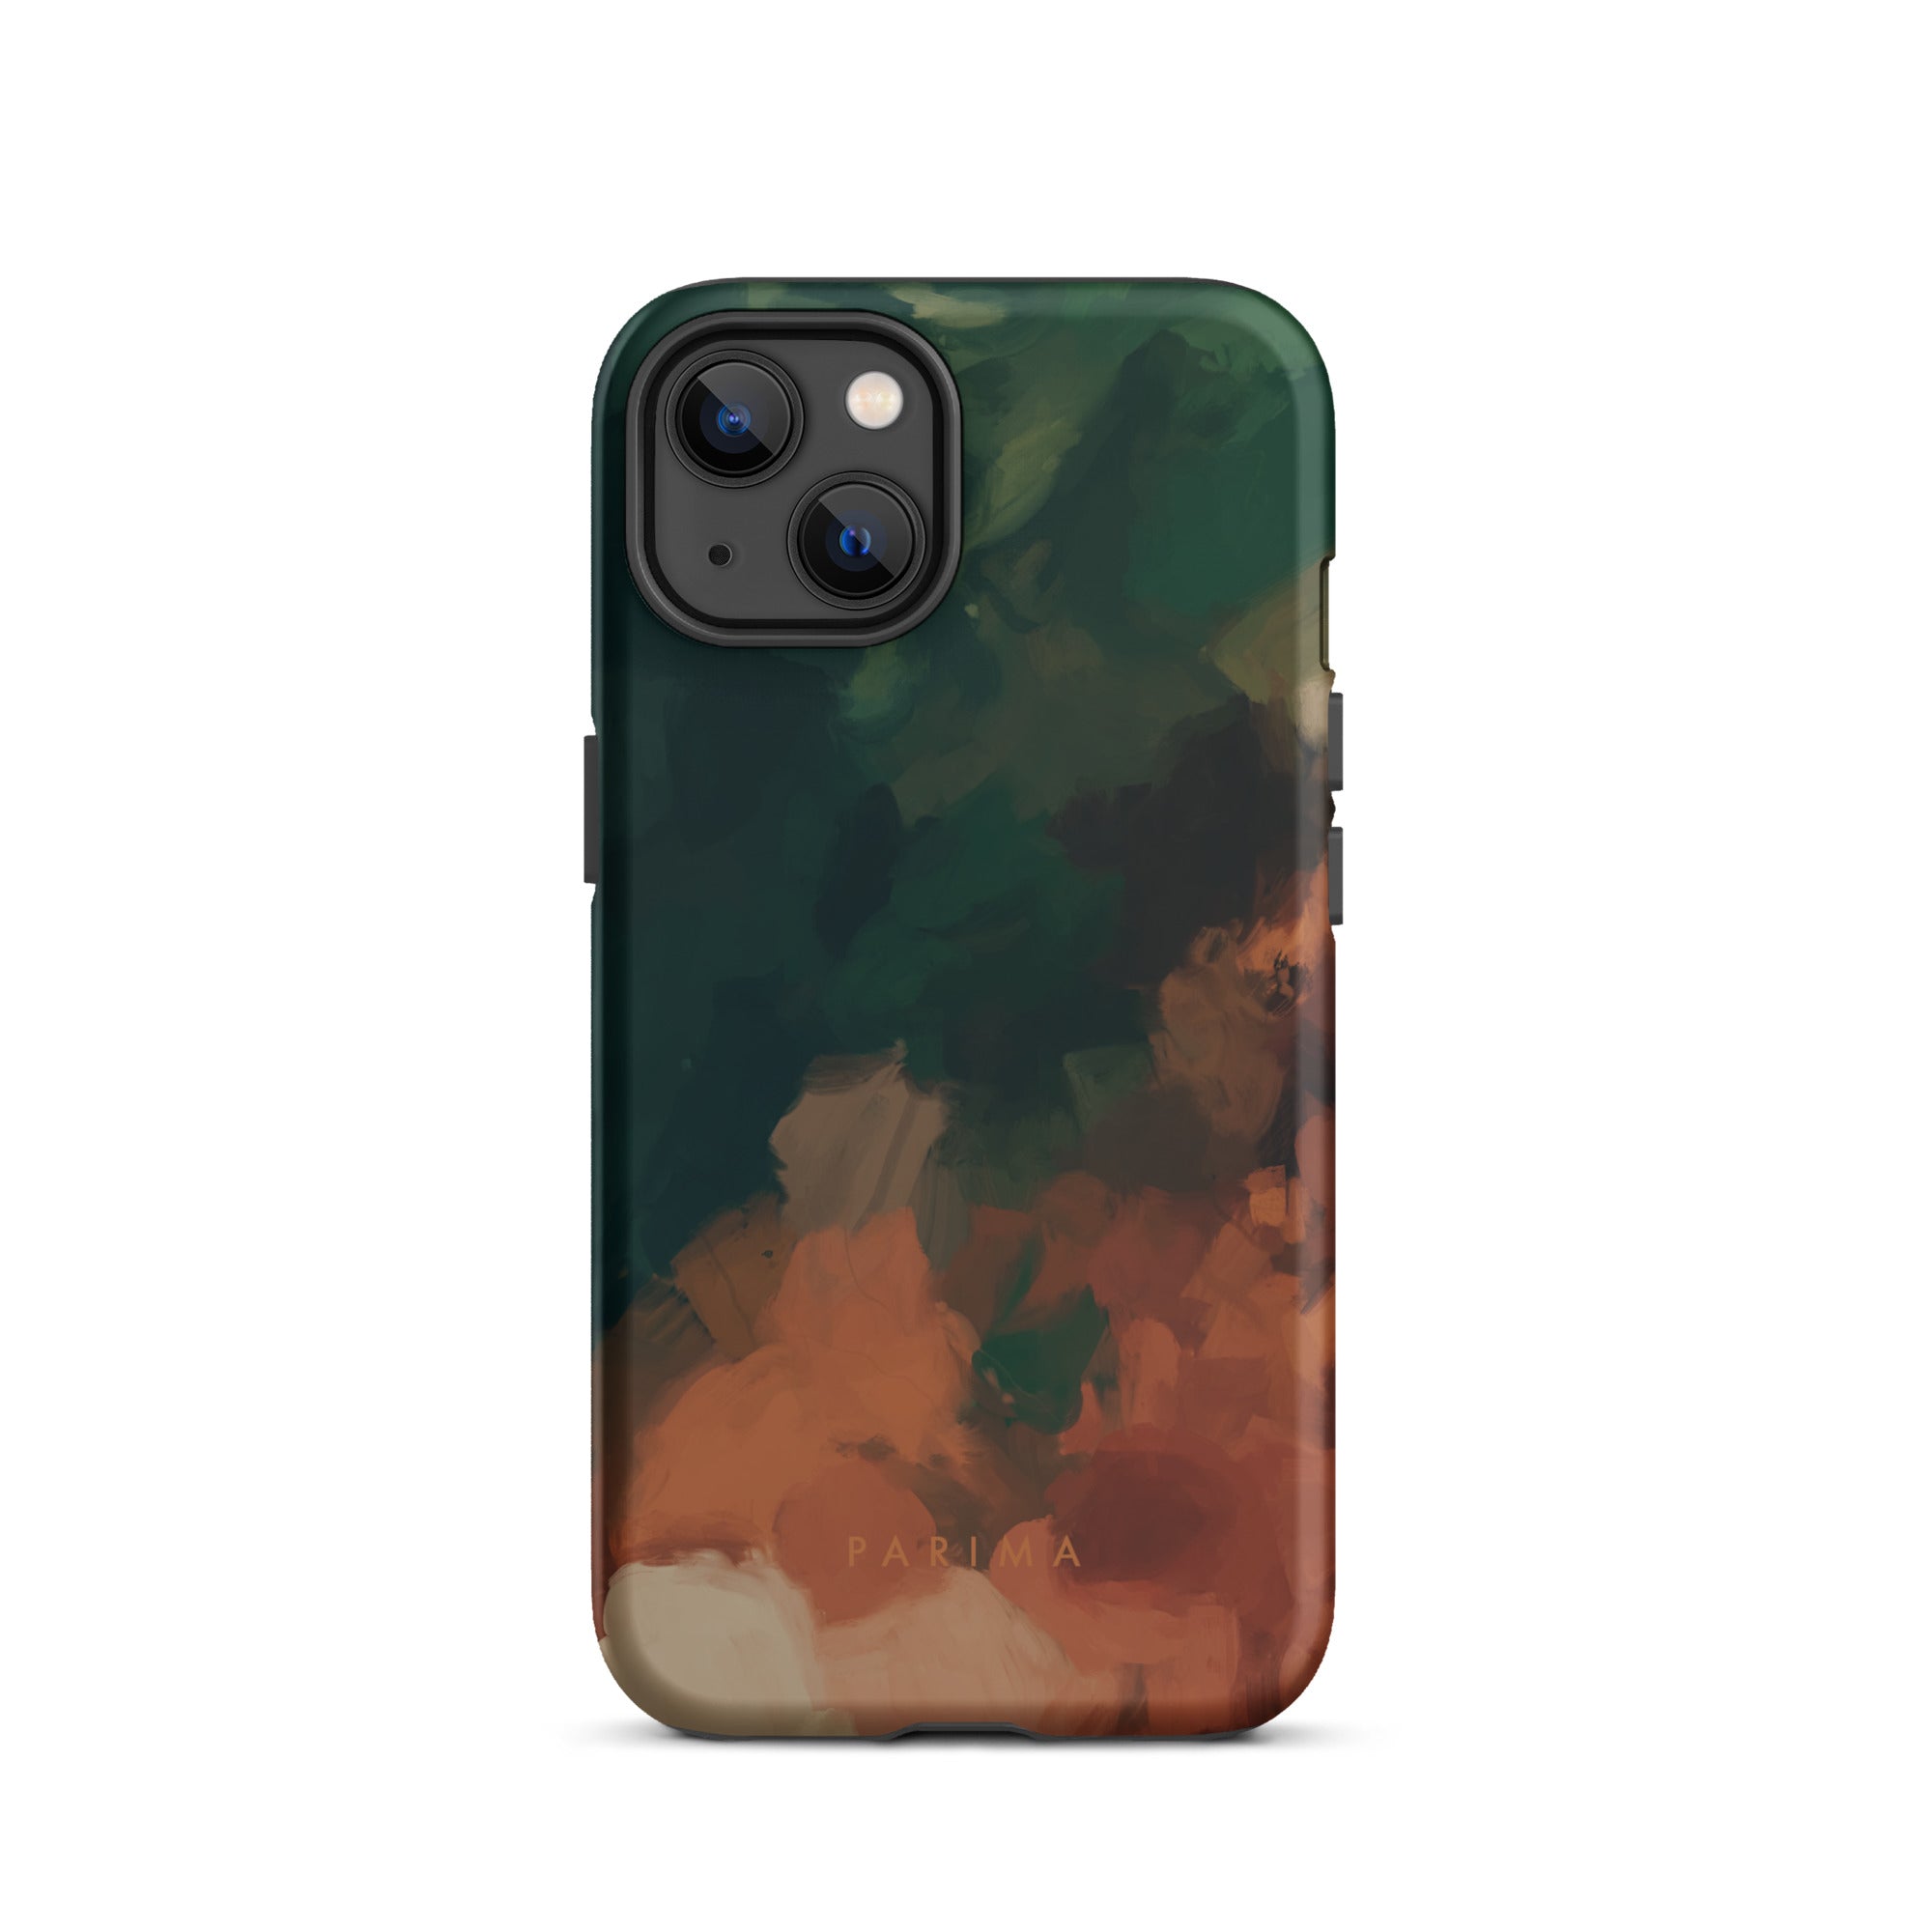 Cedar, green and brown abstract art - iPhone 13 tough case by Parima Studio